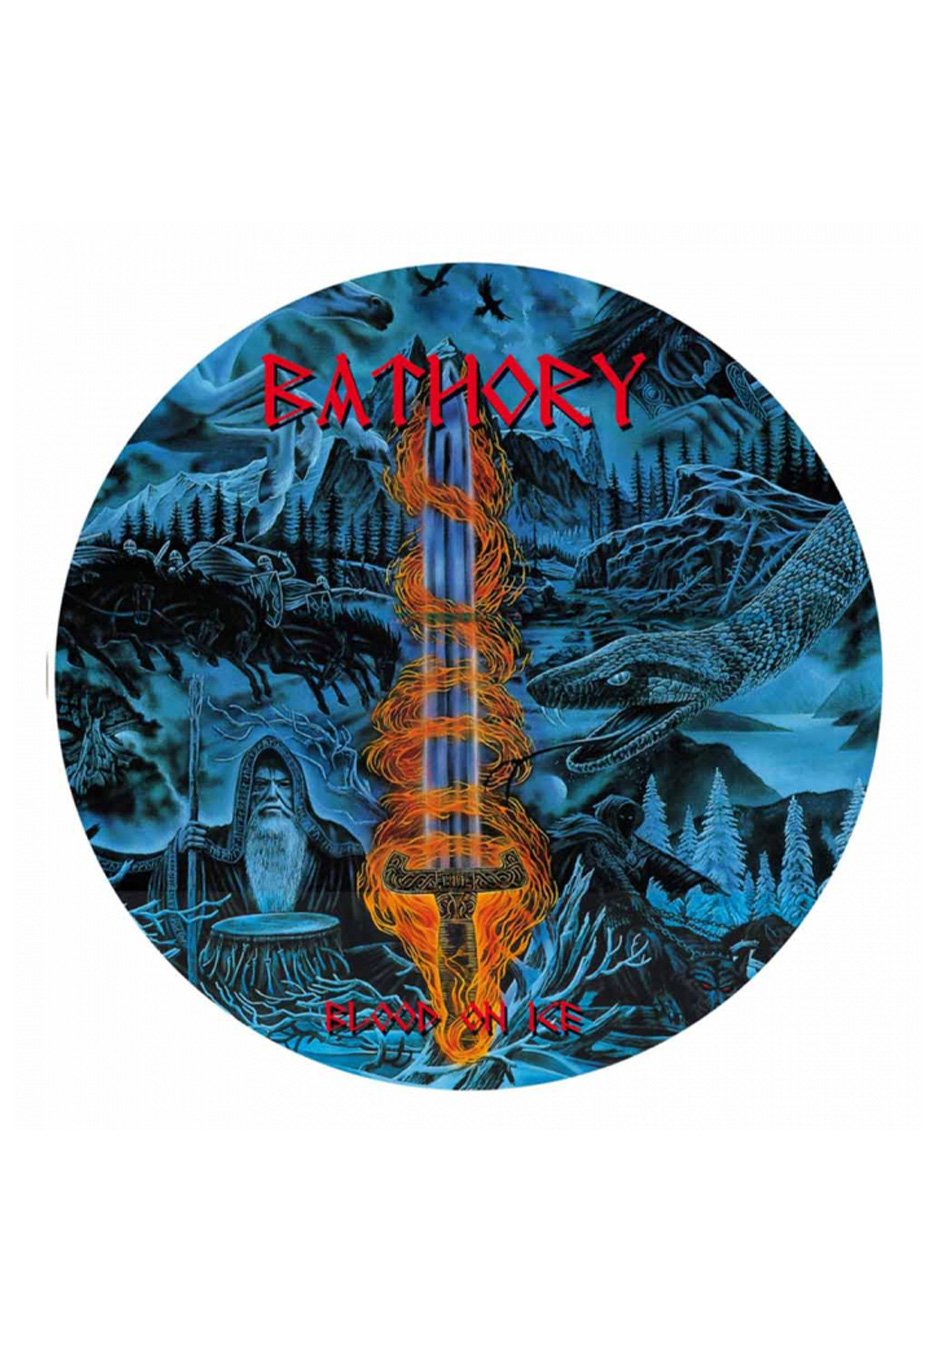 Bathory - Blood On Ice - Picture Vinyl